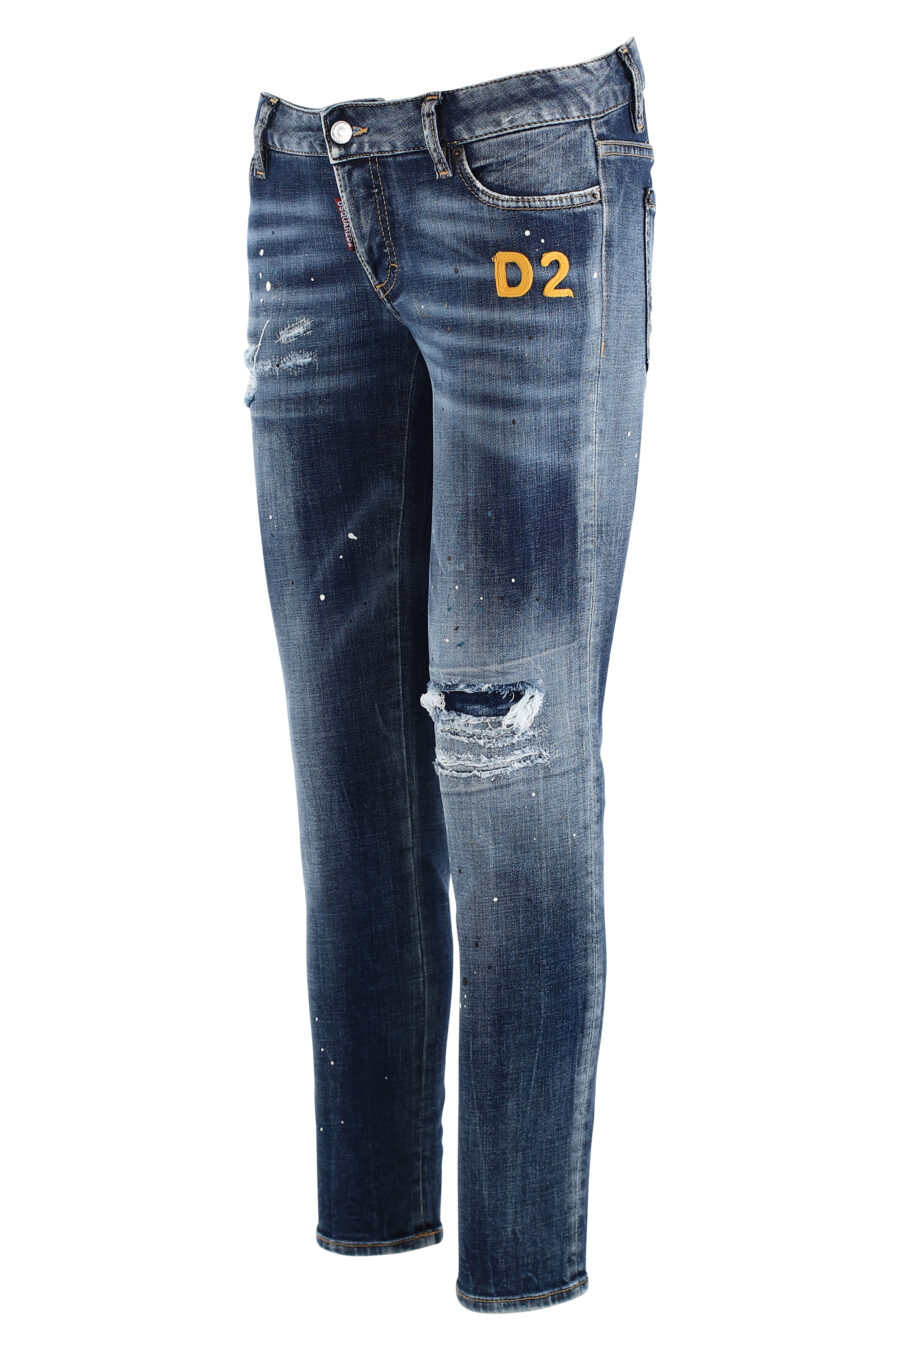 Pantalón tejano azul Jennifer cropped jean con bordado amarillo - IMG 7586